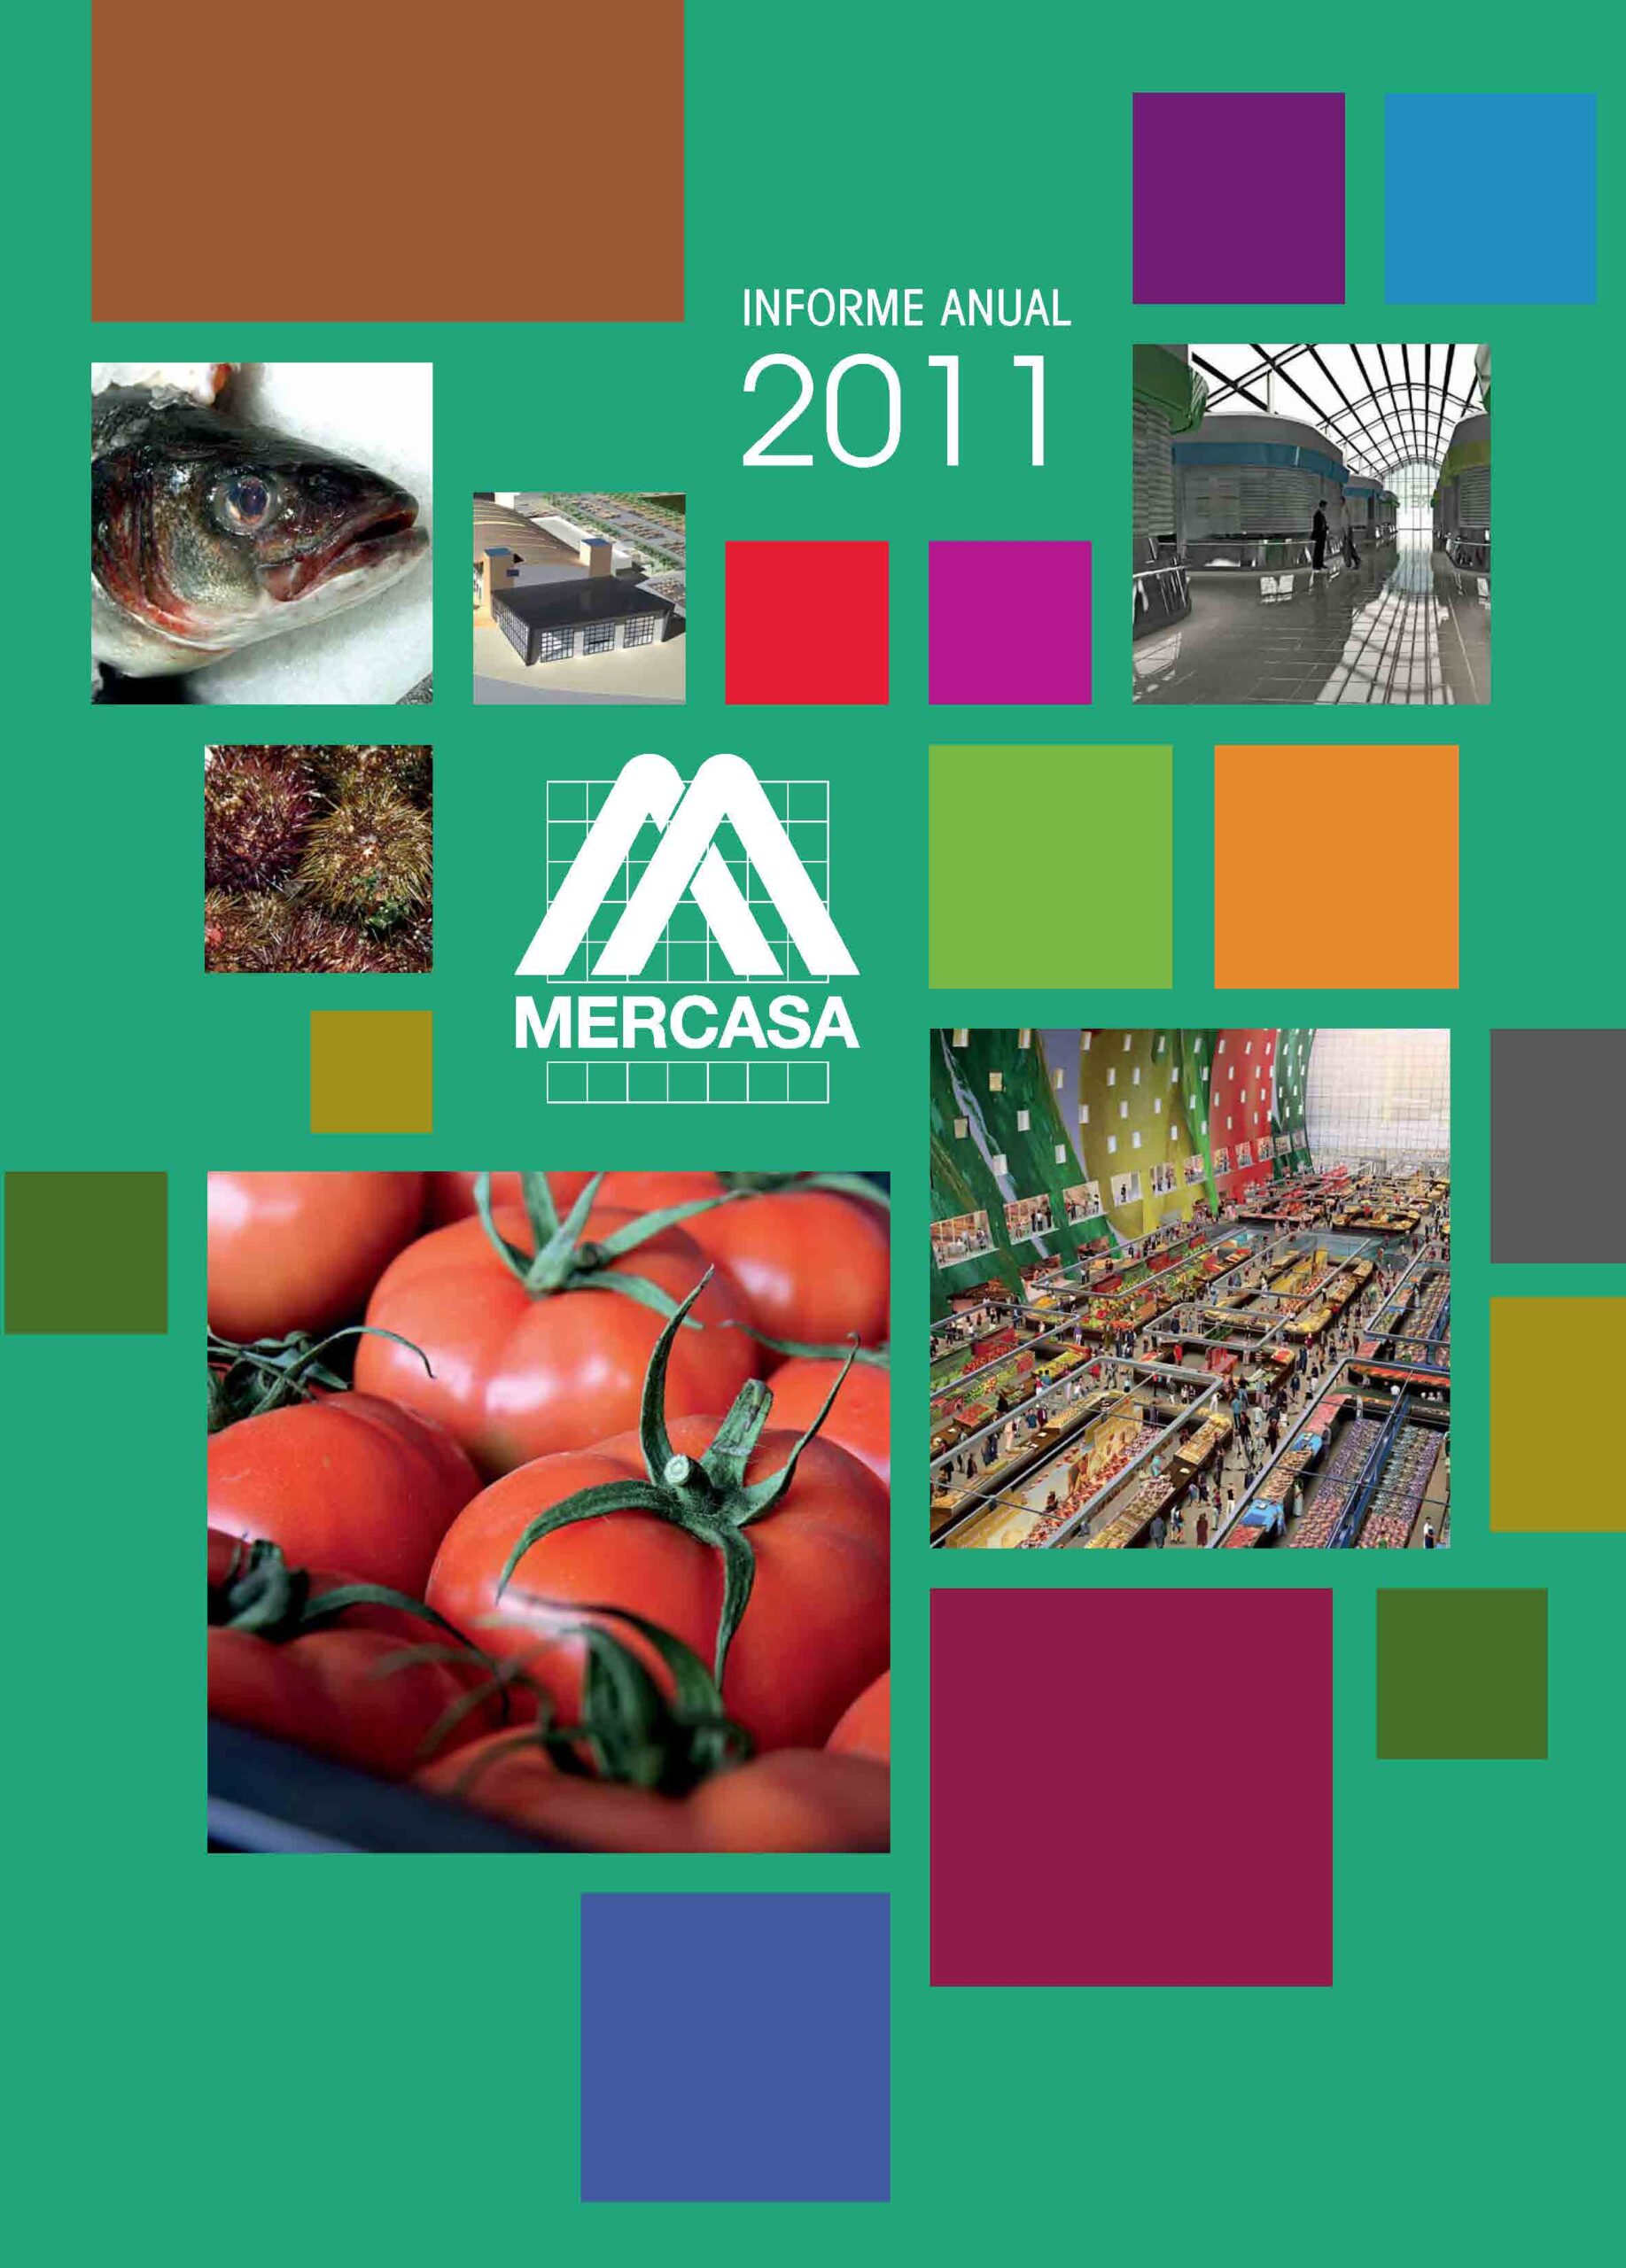 Informe anual Mercasa 2011